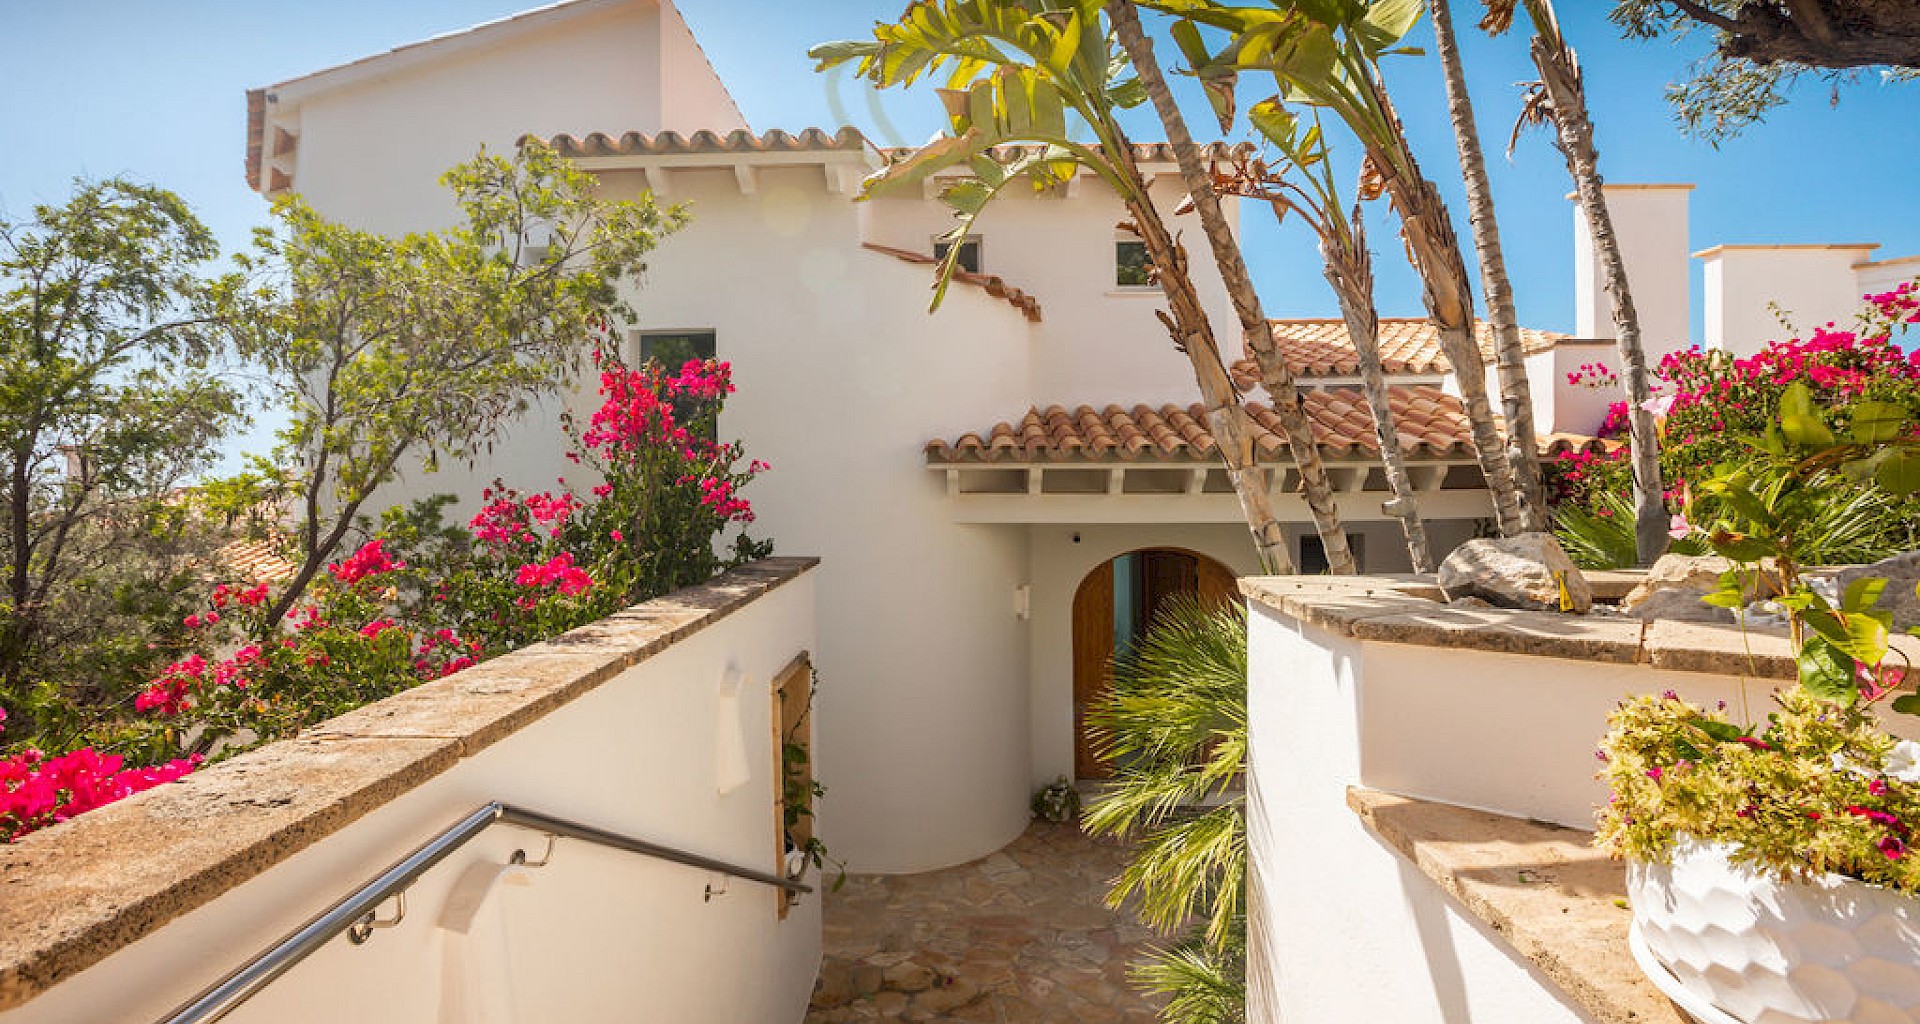 KROHN & LUEDEMANN Mediterrane Luxus Villa mit atemberaubendem Meerblick in Port Andratx - La Mola 